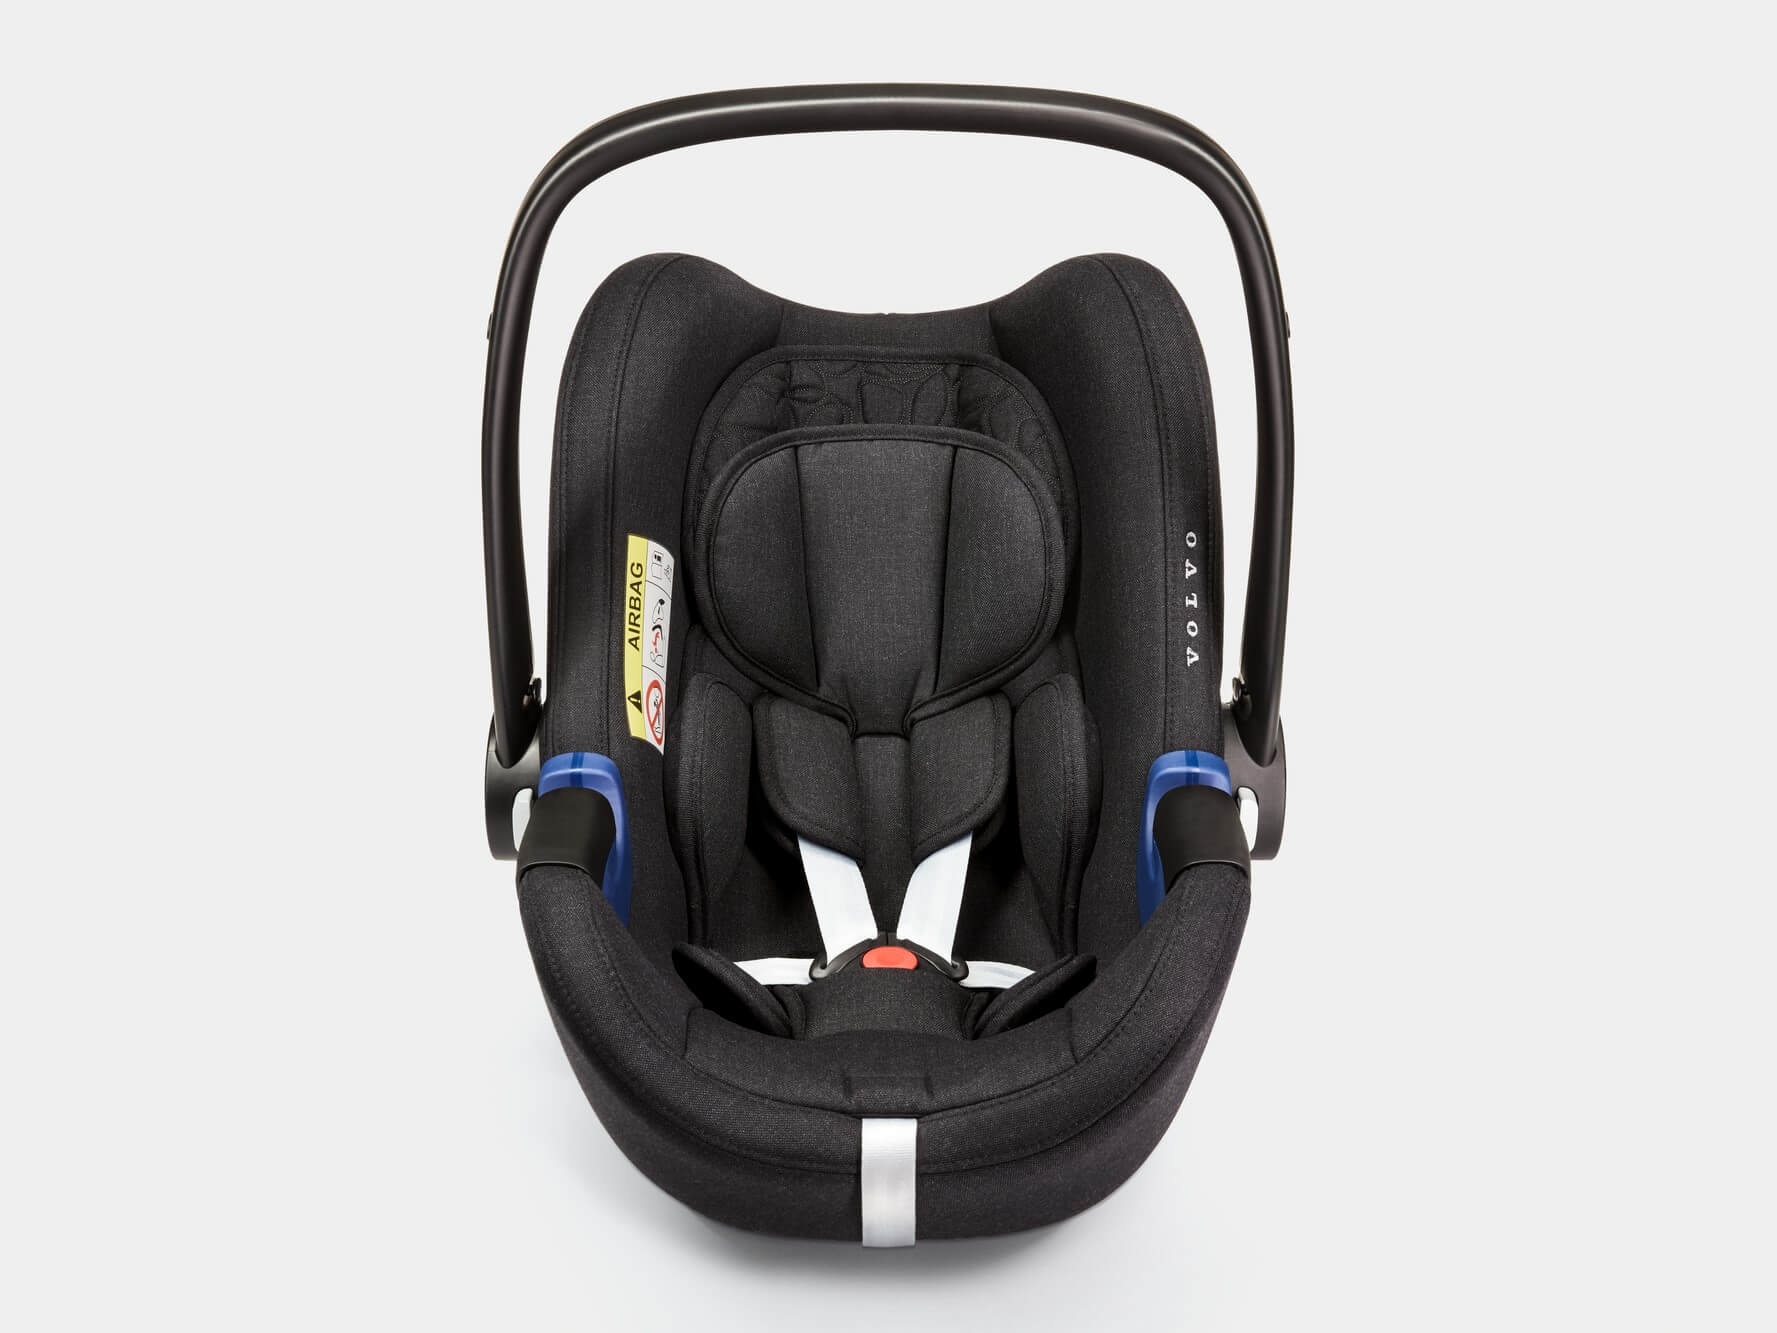 Volvo infant child seat for children measuring 40-73cm.